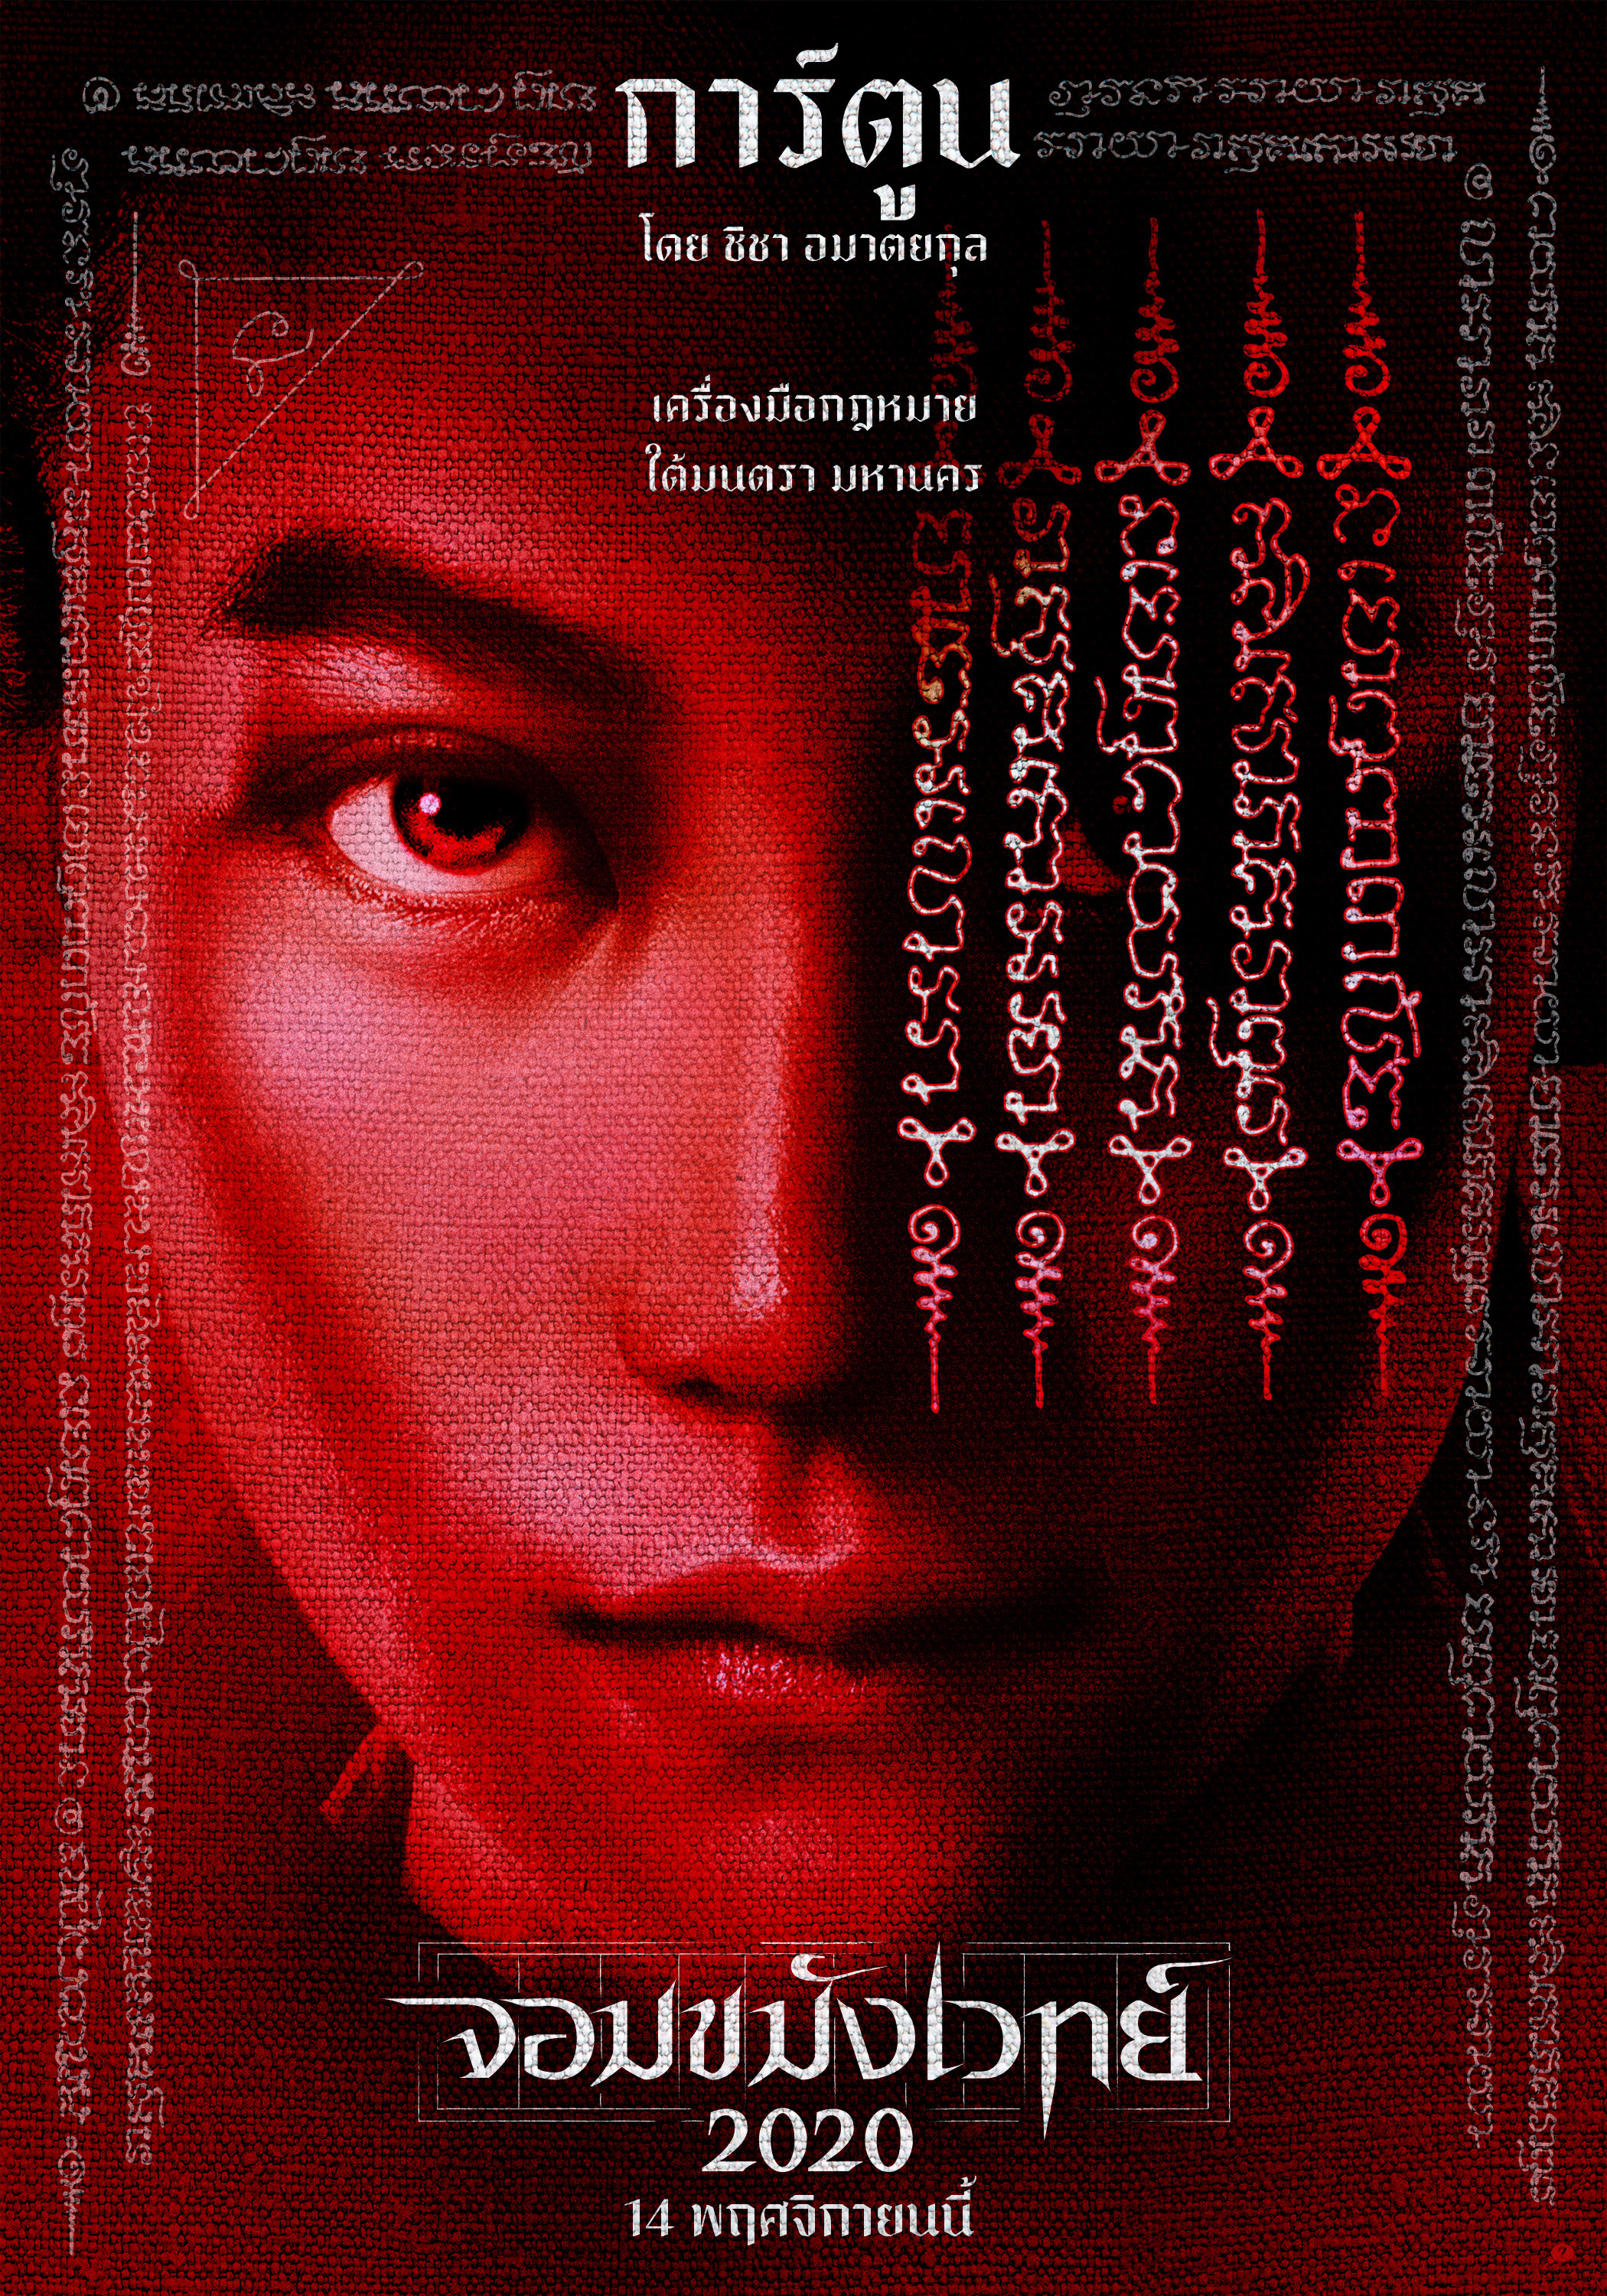 Mega Sized Movie Poster Image for Necromancer 2020 (#10 of 11)